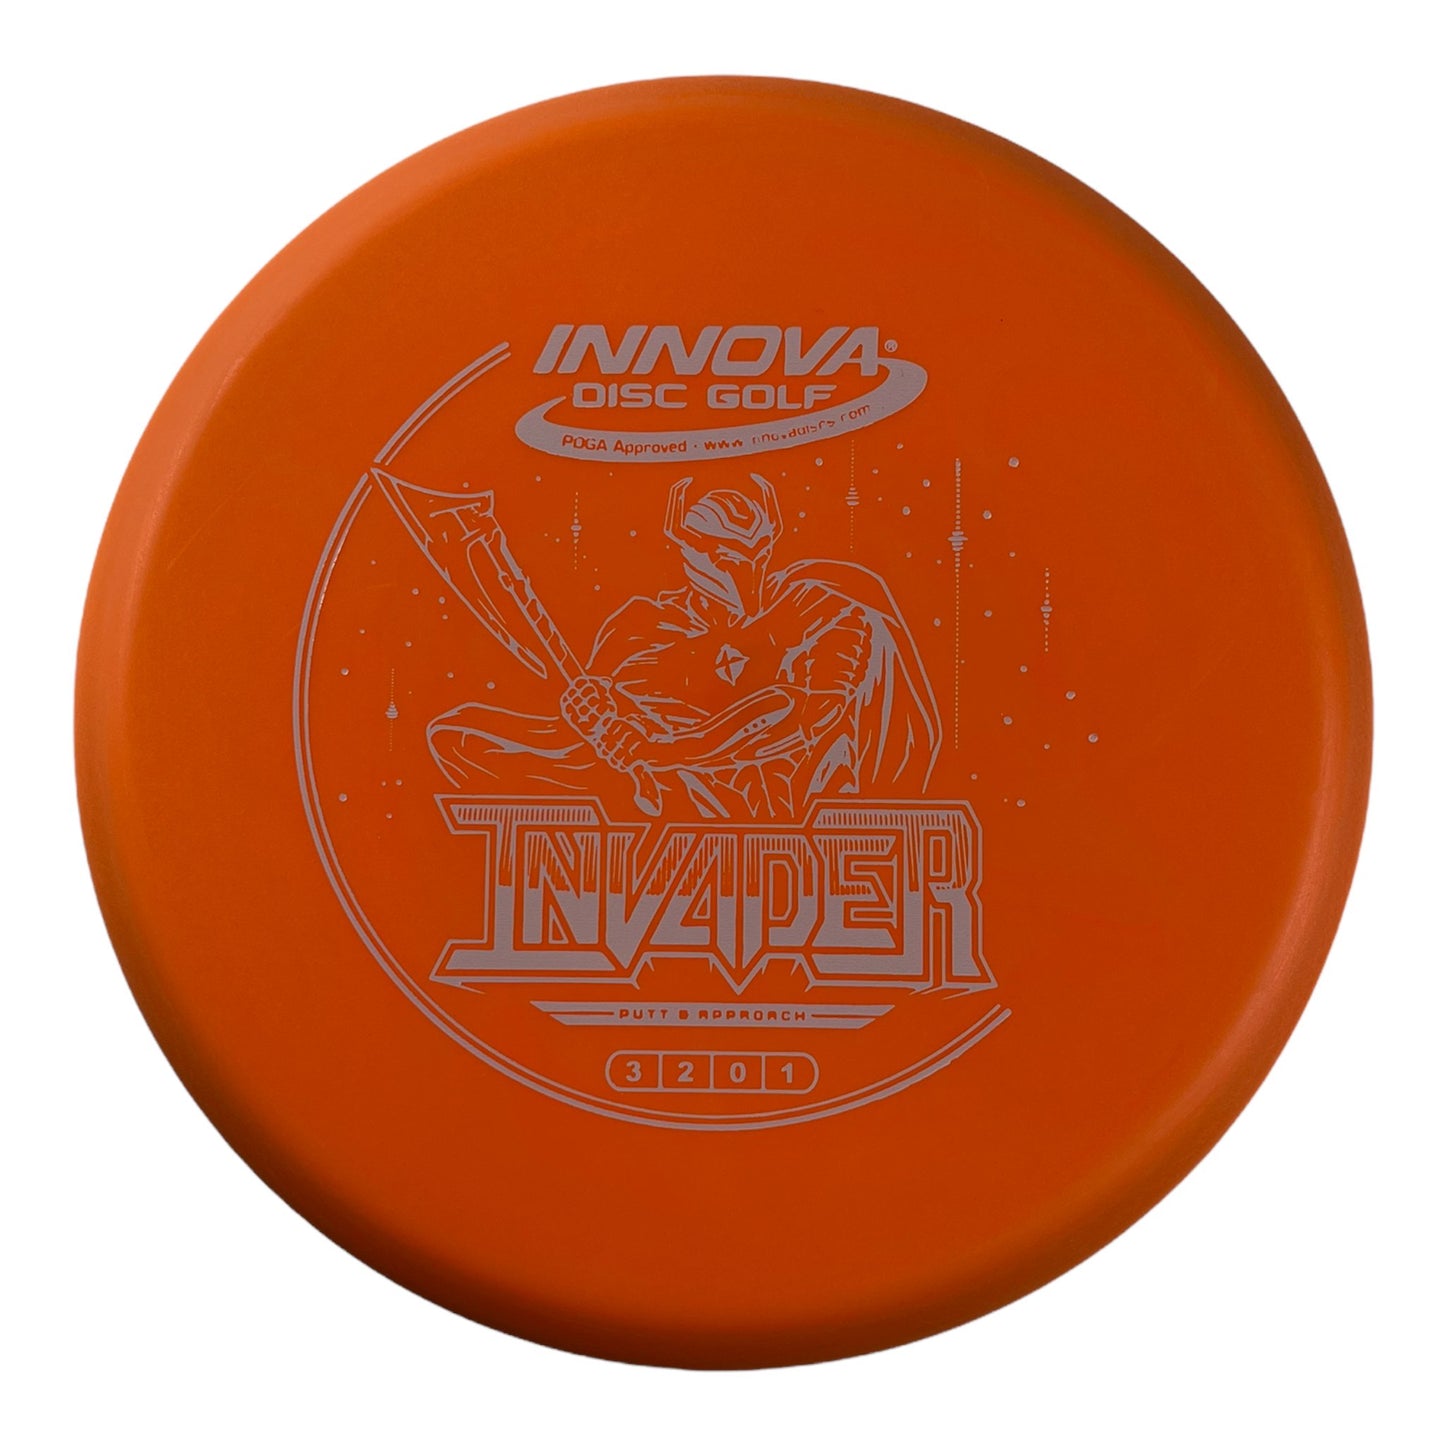 Innova Champion Discs Invader | DX | Orange/White 175g Disc Golf